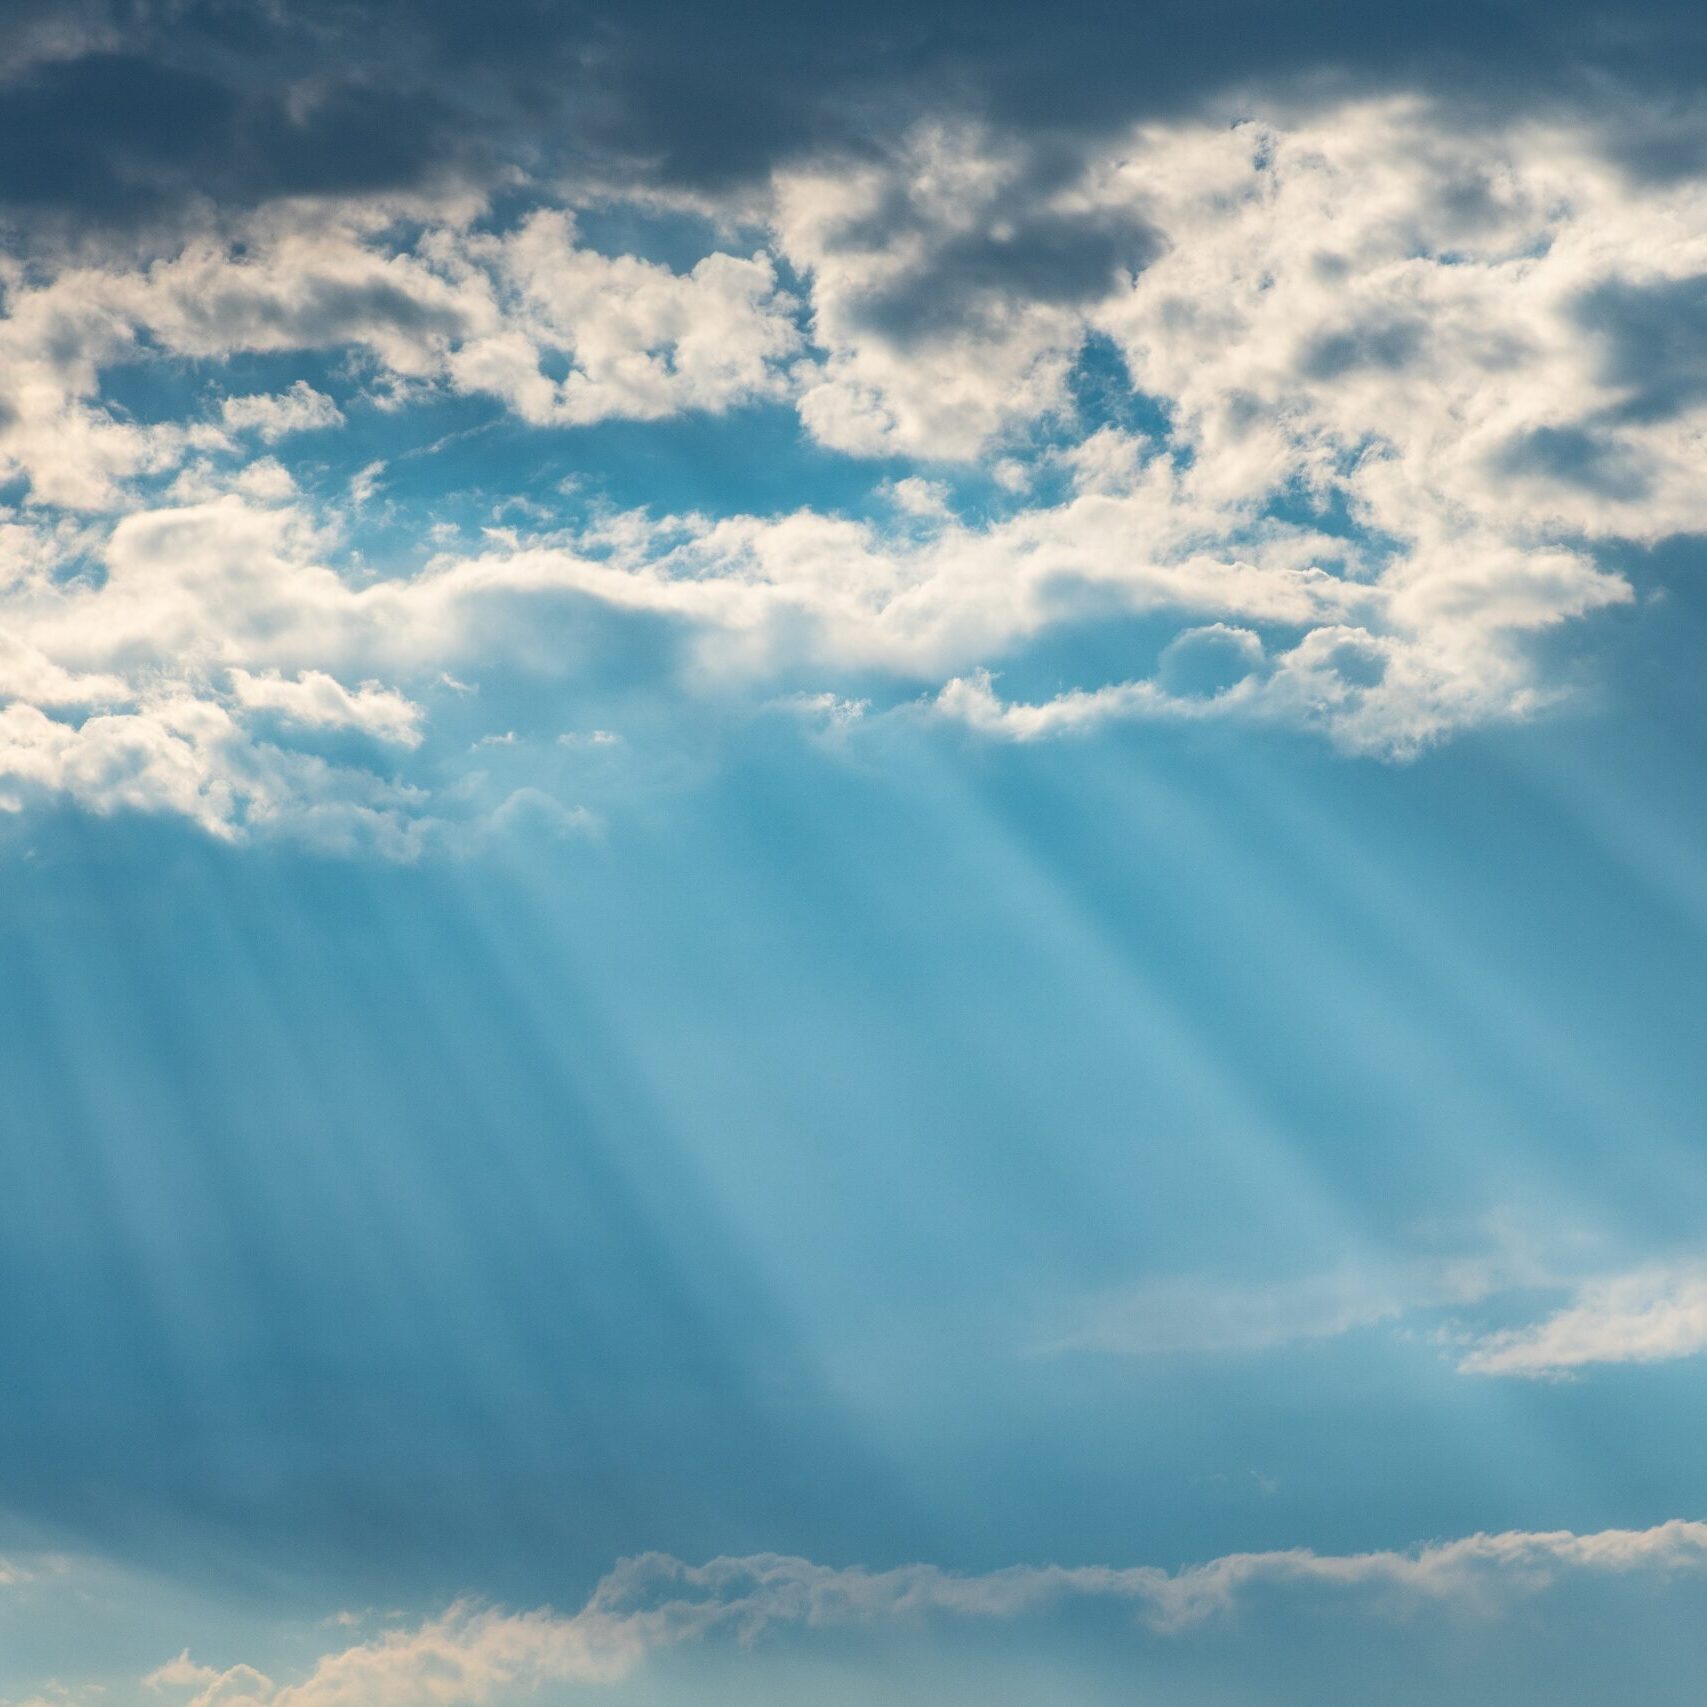 Sun rays burst through clouds against an azure sky. Photo by Brett Sayles from Pexels